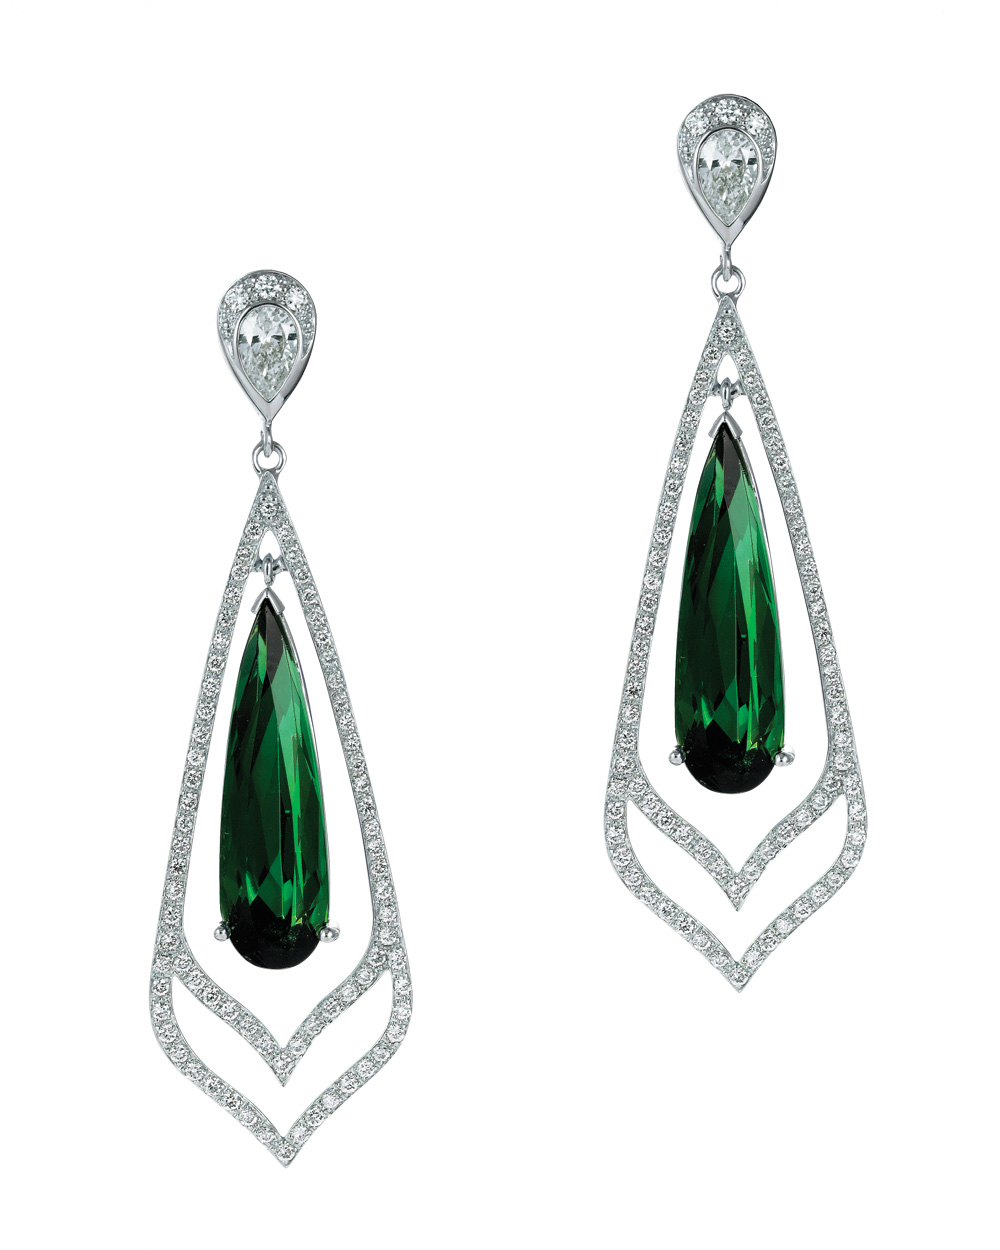 Partridge Jewellers earrings, $15,300